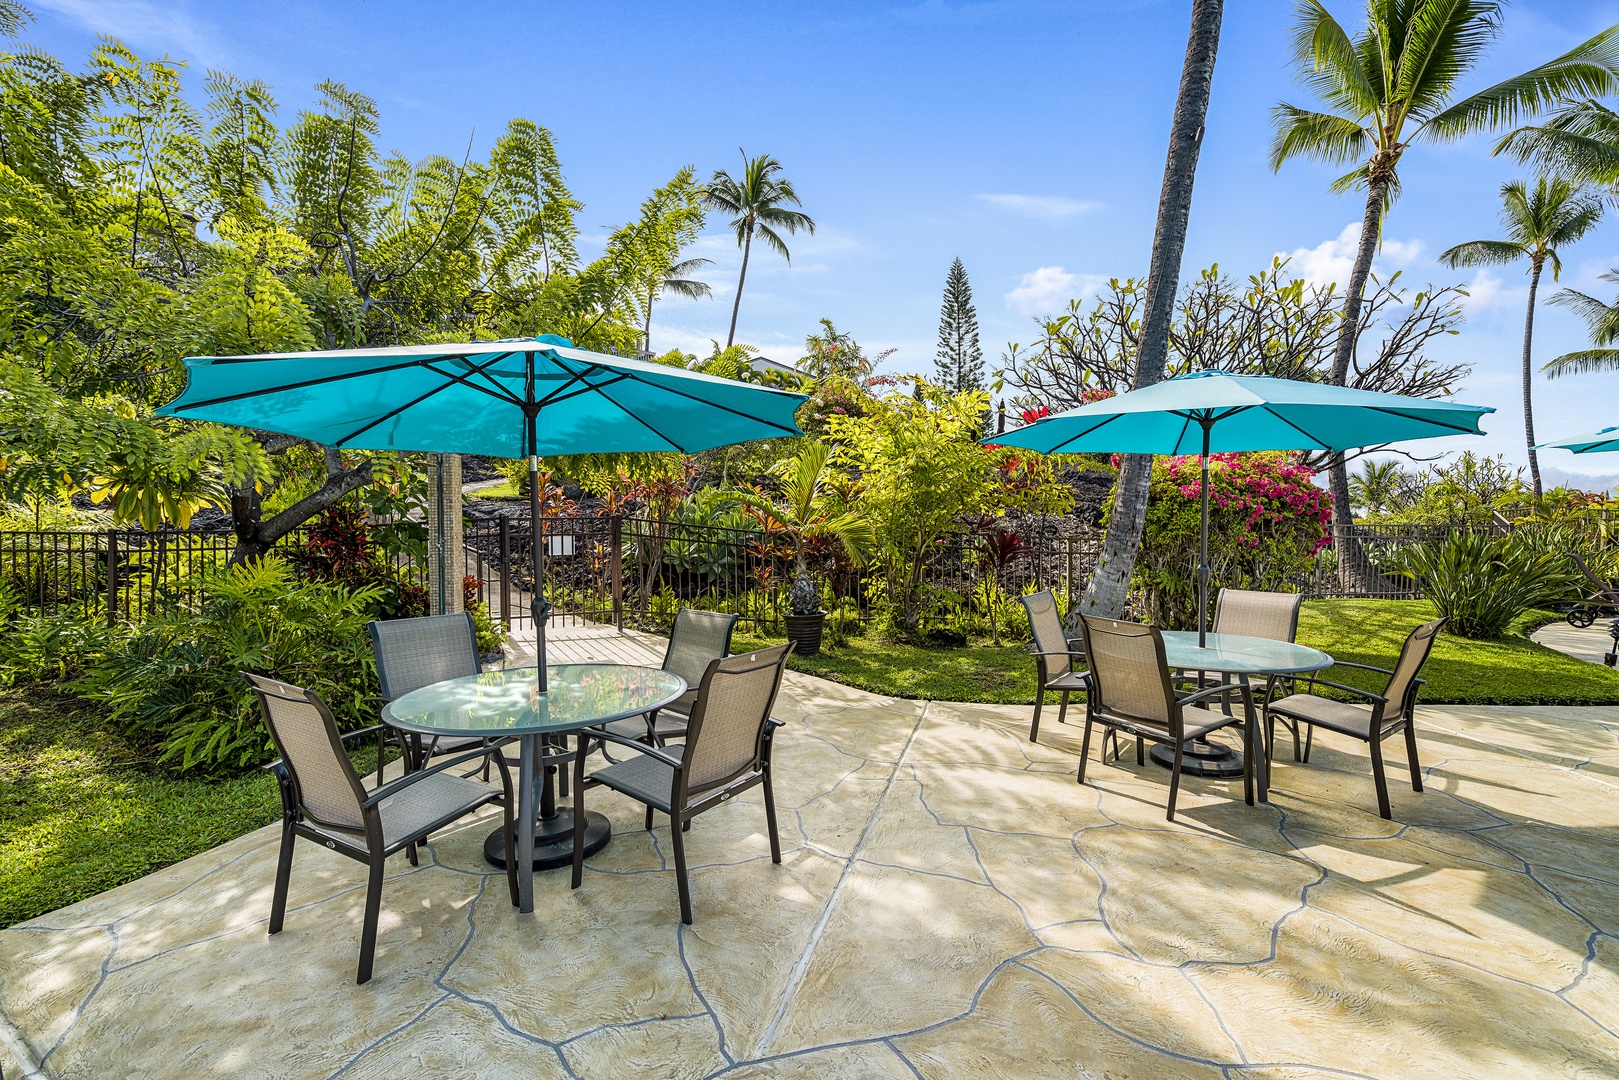 Kailua Kona Vacation Rentals, Keauhou Resort 104 - Community outdoor seating